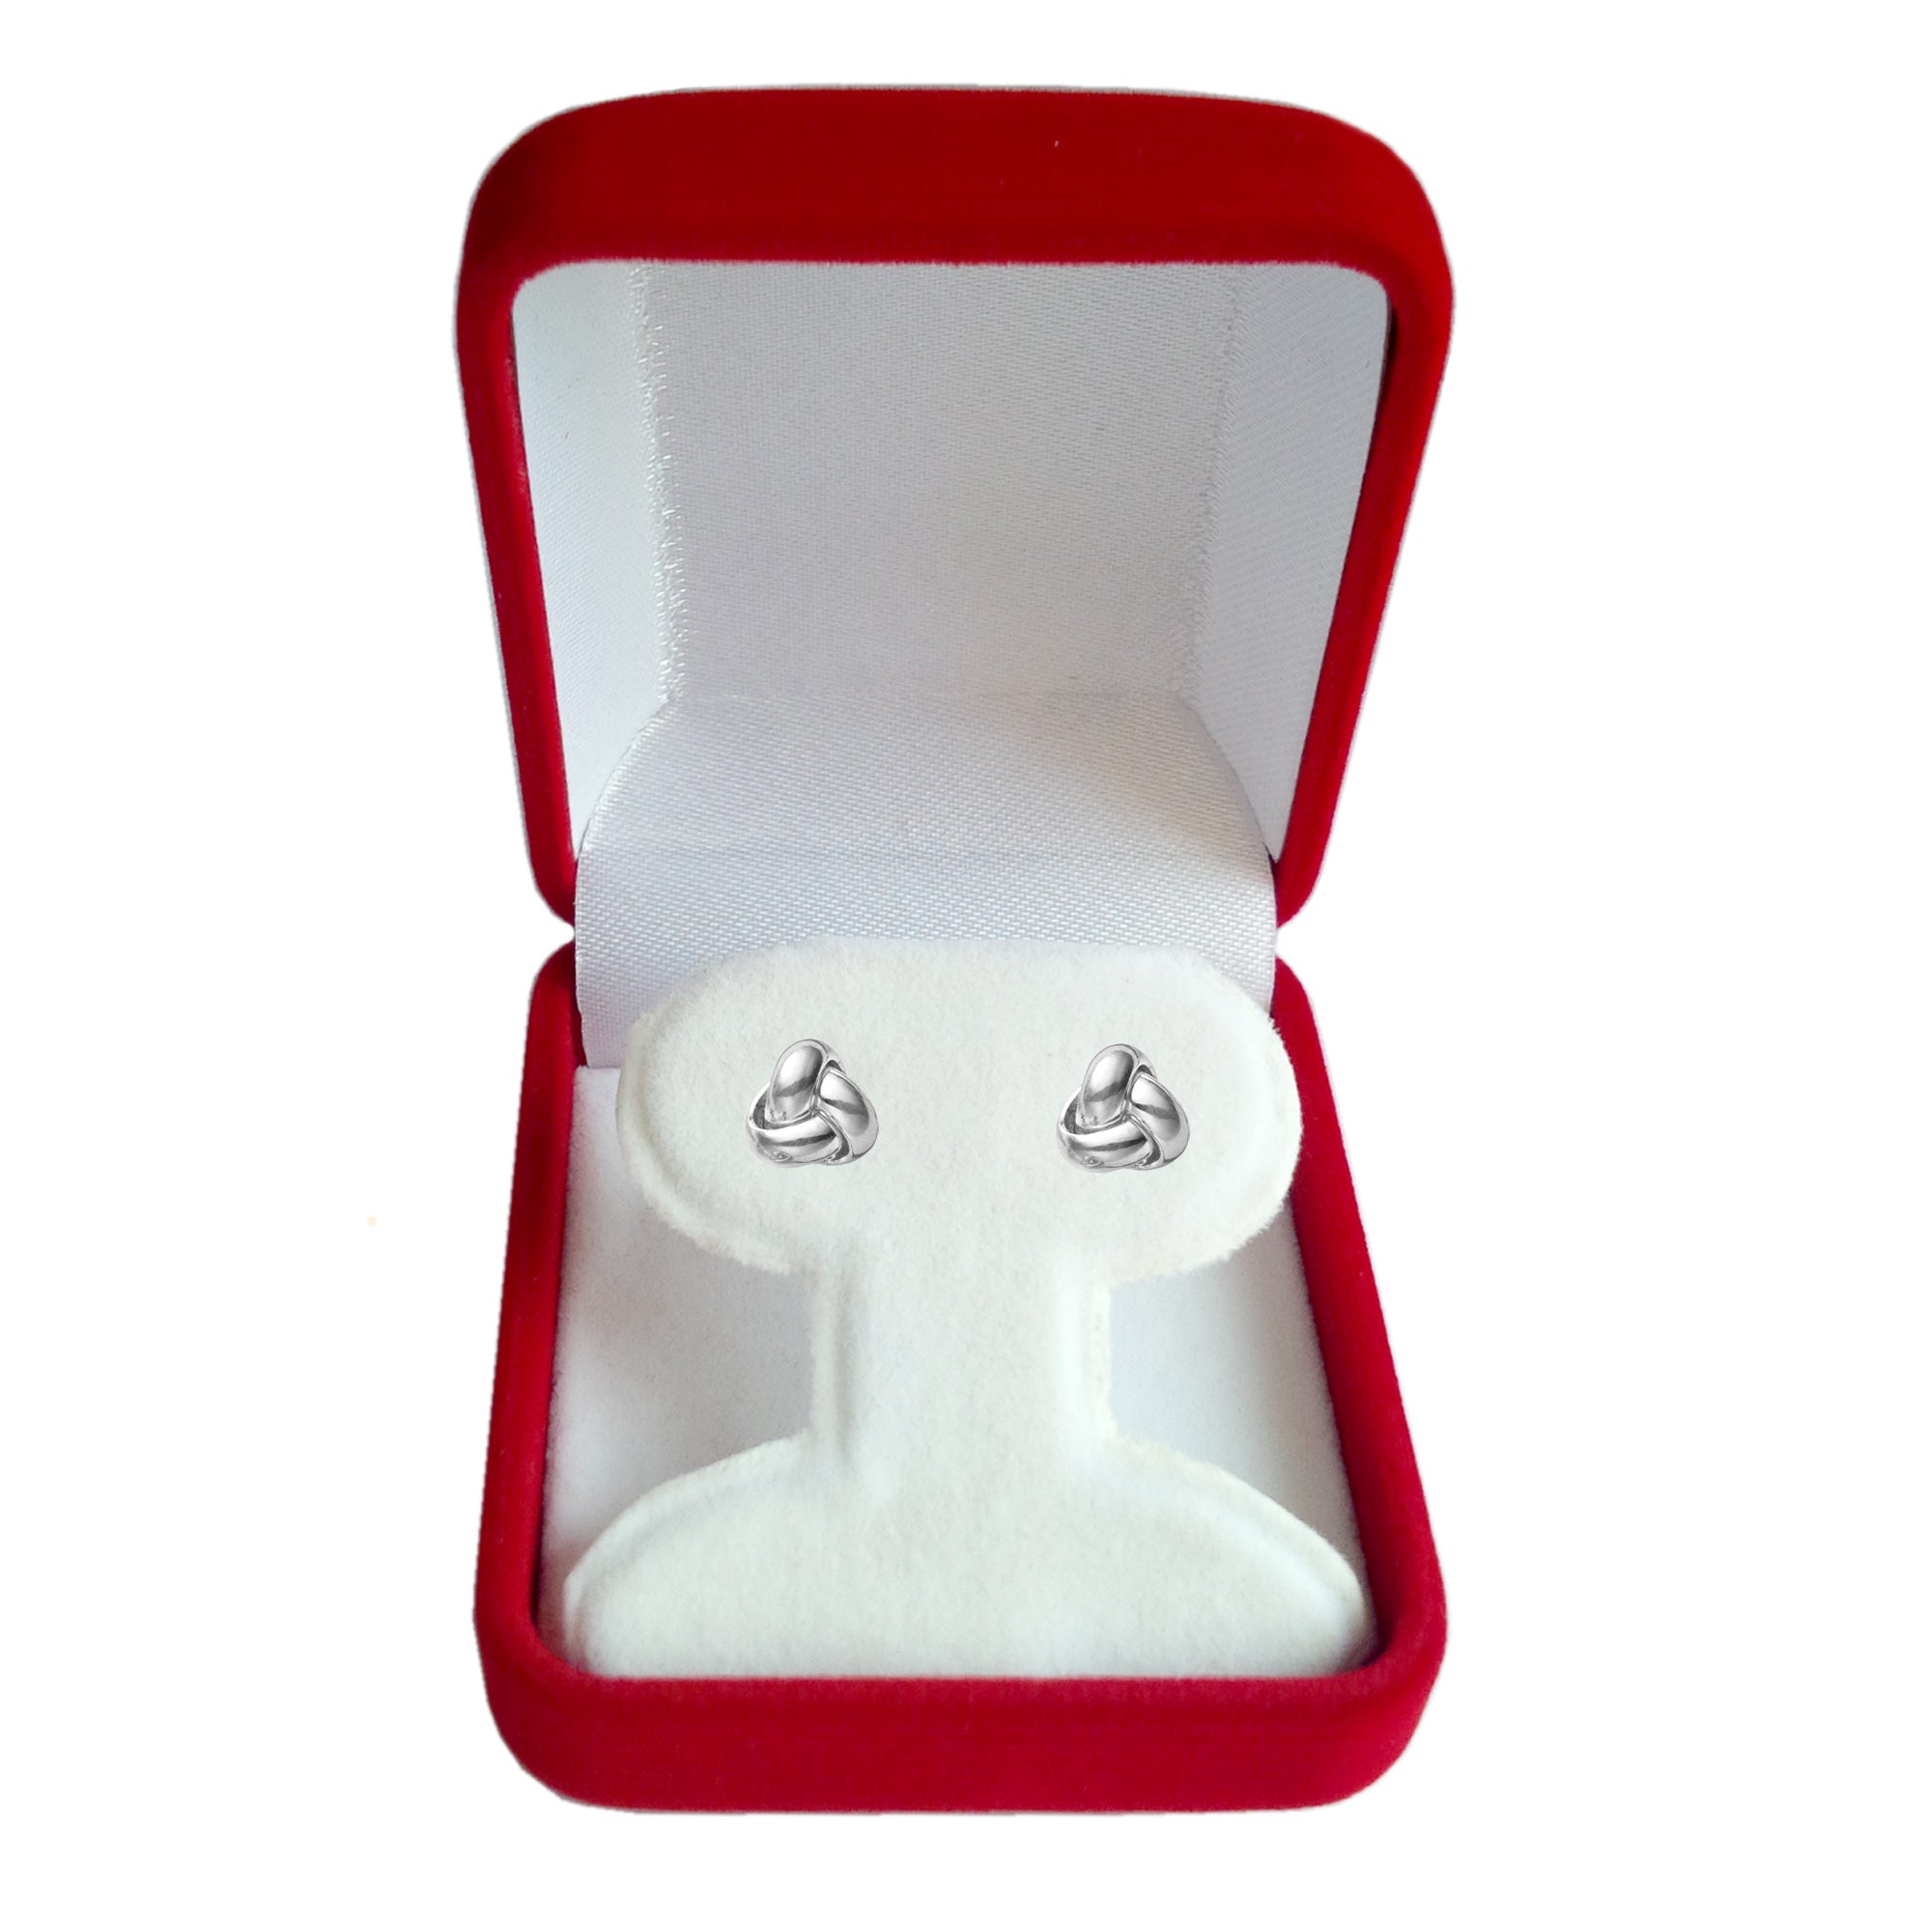 14k Gold Love Knot Stud Earrings, 6mm fine designer jewelry for men and women